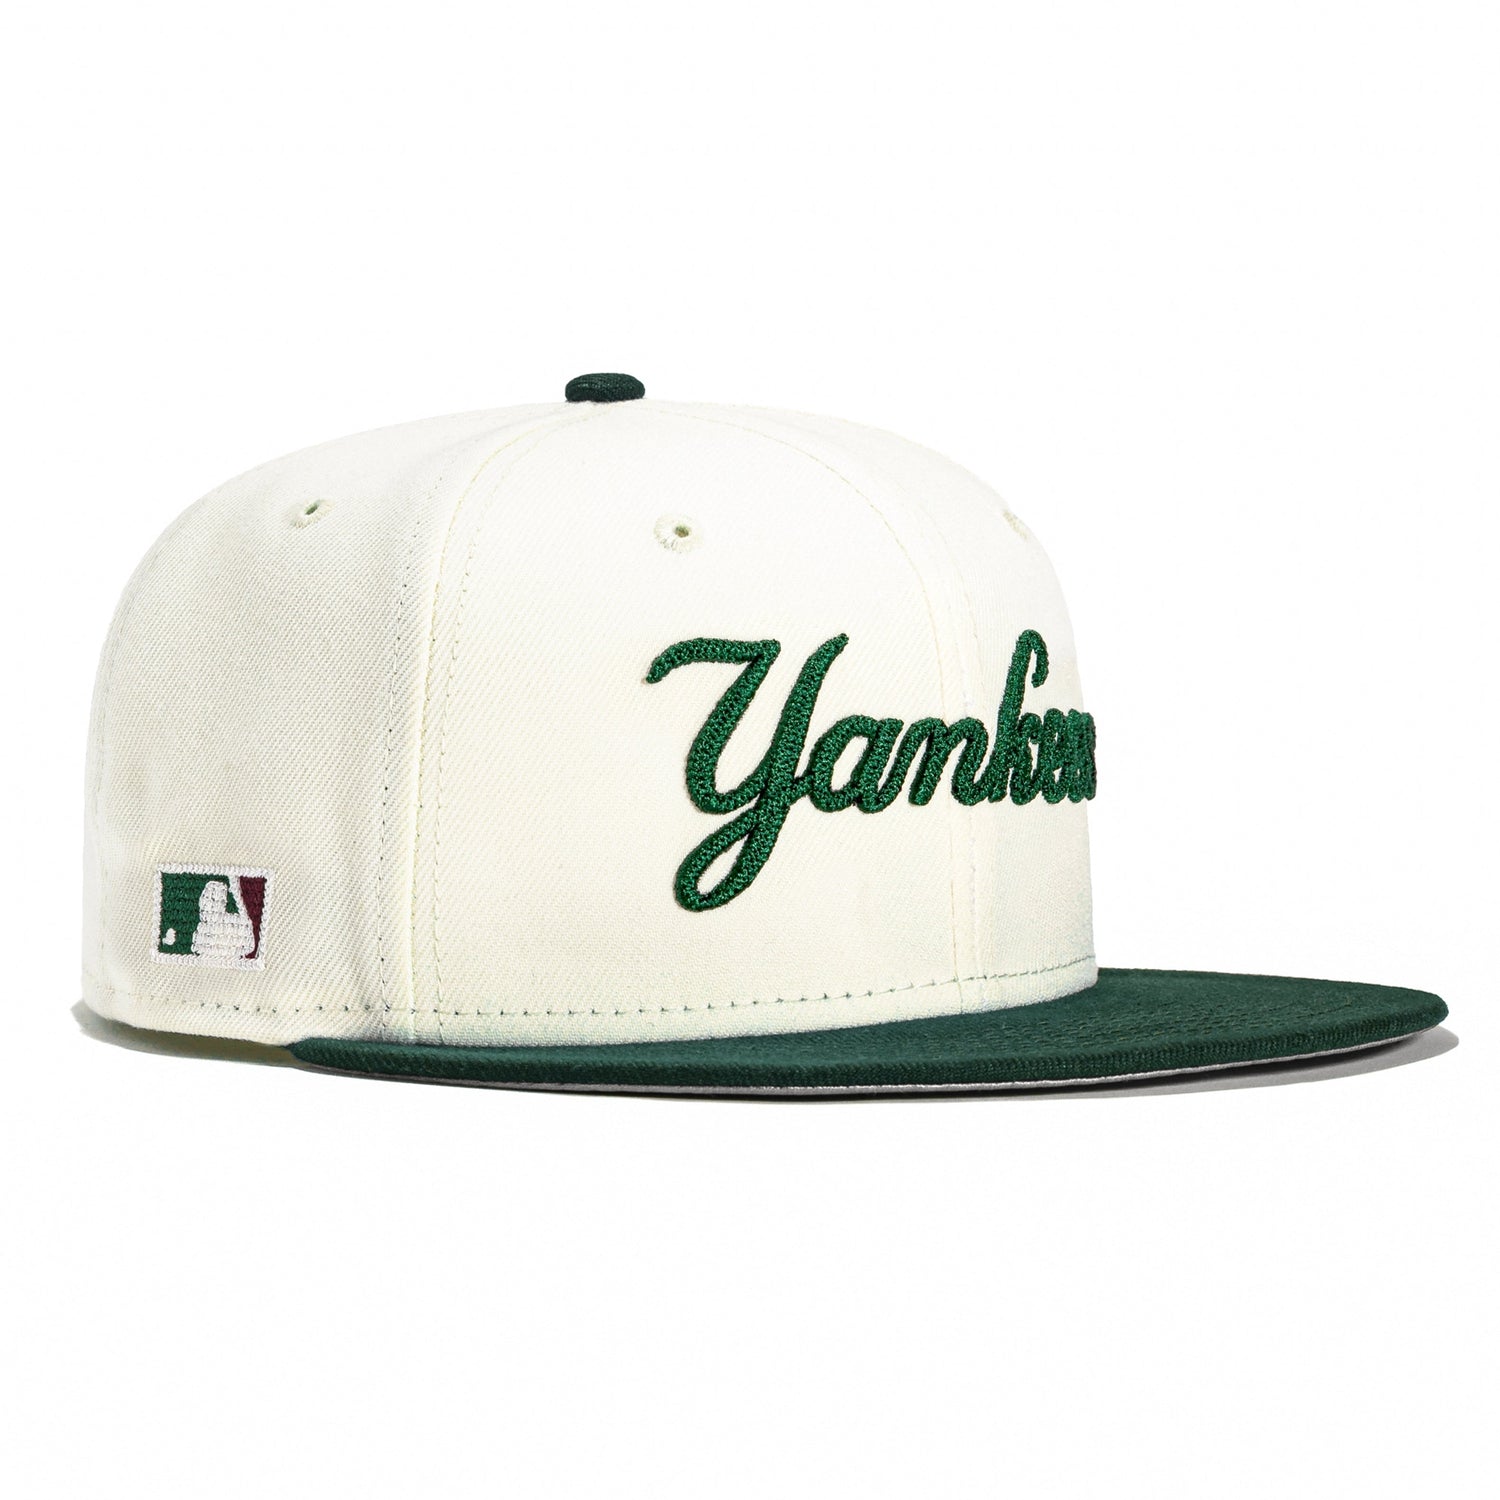 New Era 59FIFTY Chain Stitch New York Yankees Hat - White, Green White/Green / 7